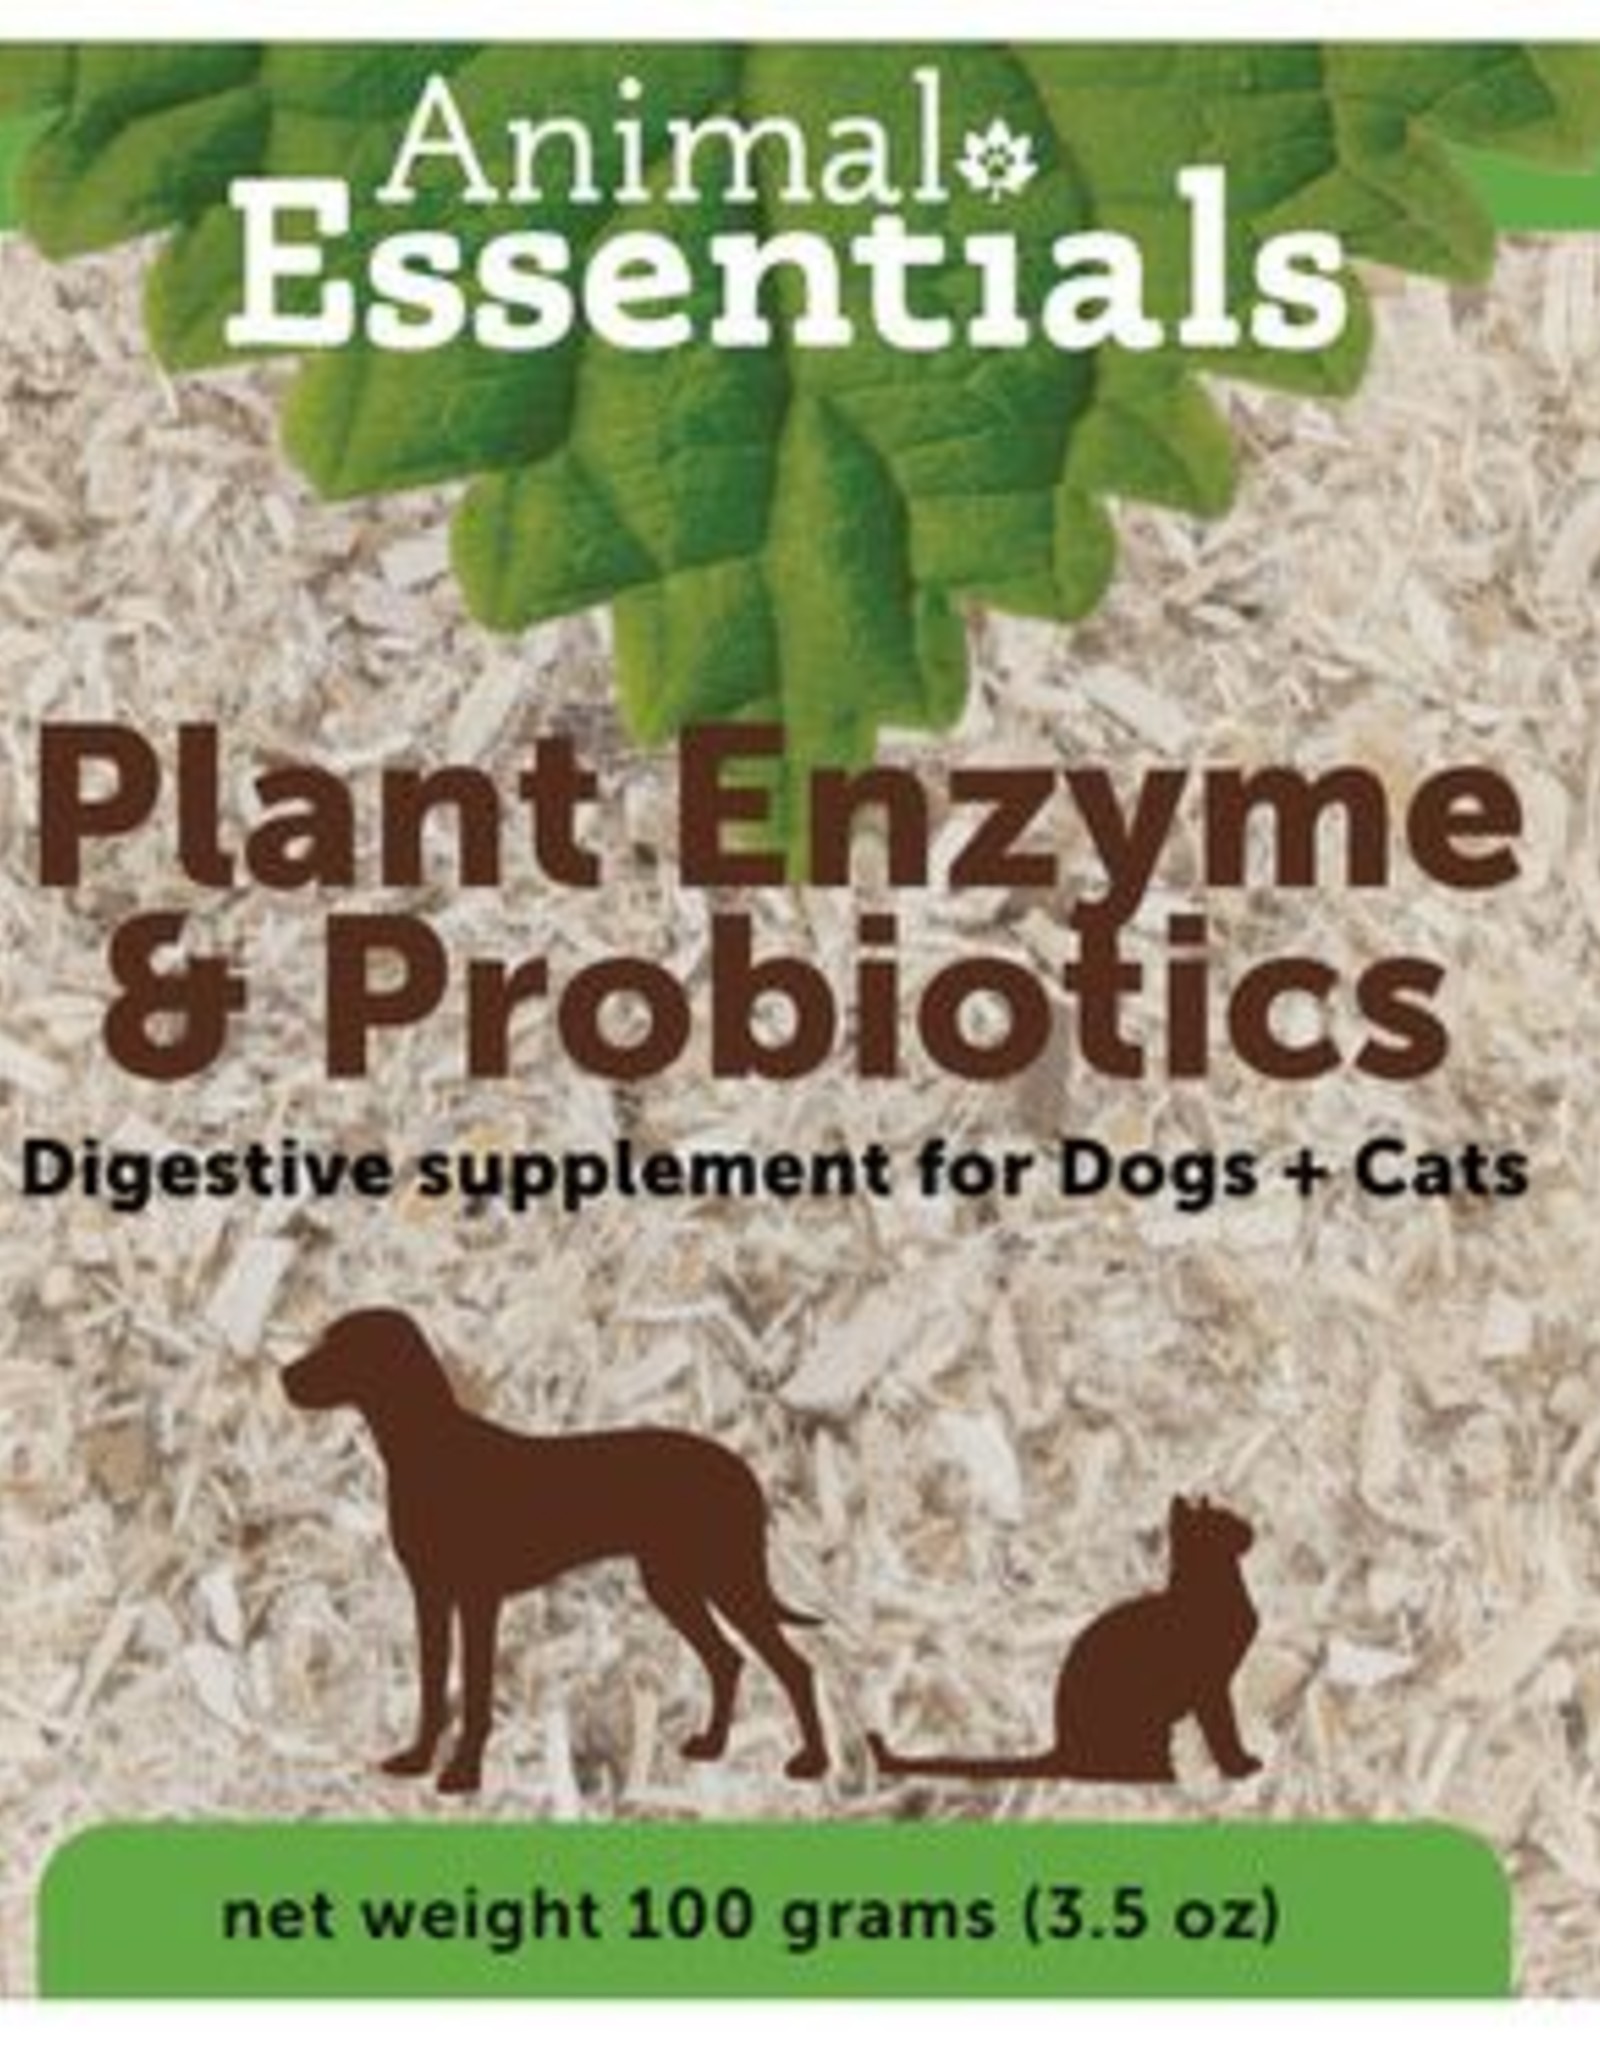 Animal Essentials Animal Essentials Plant Enzyme & Probiotics 100g